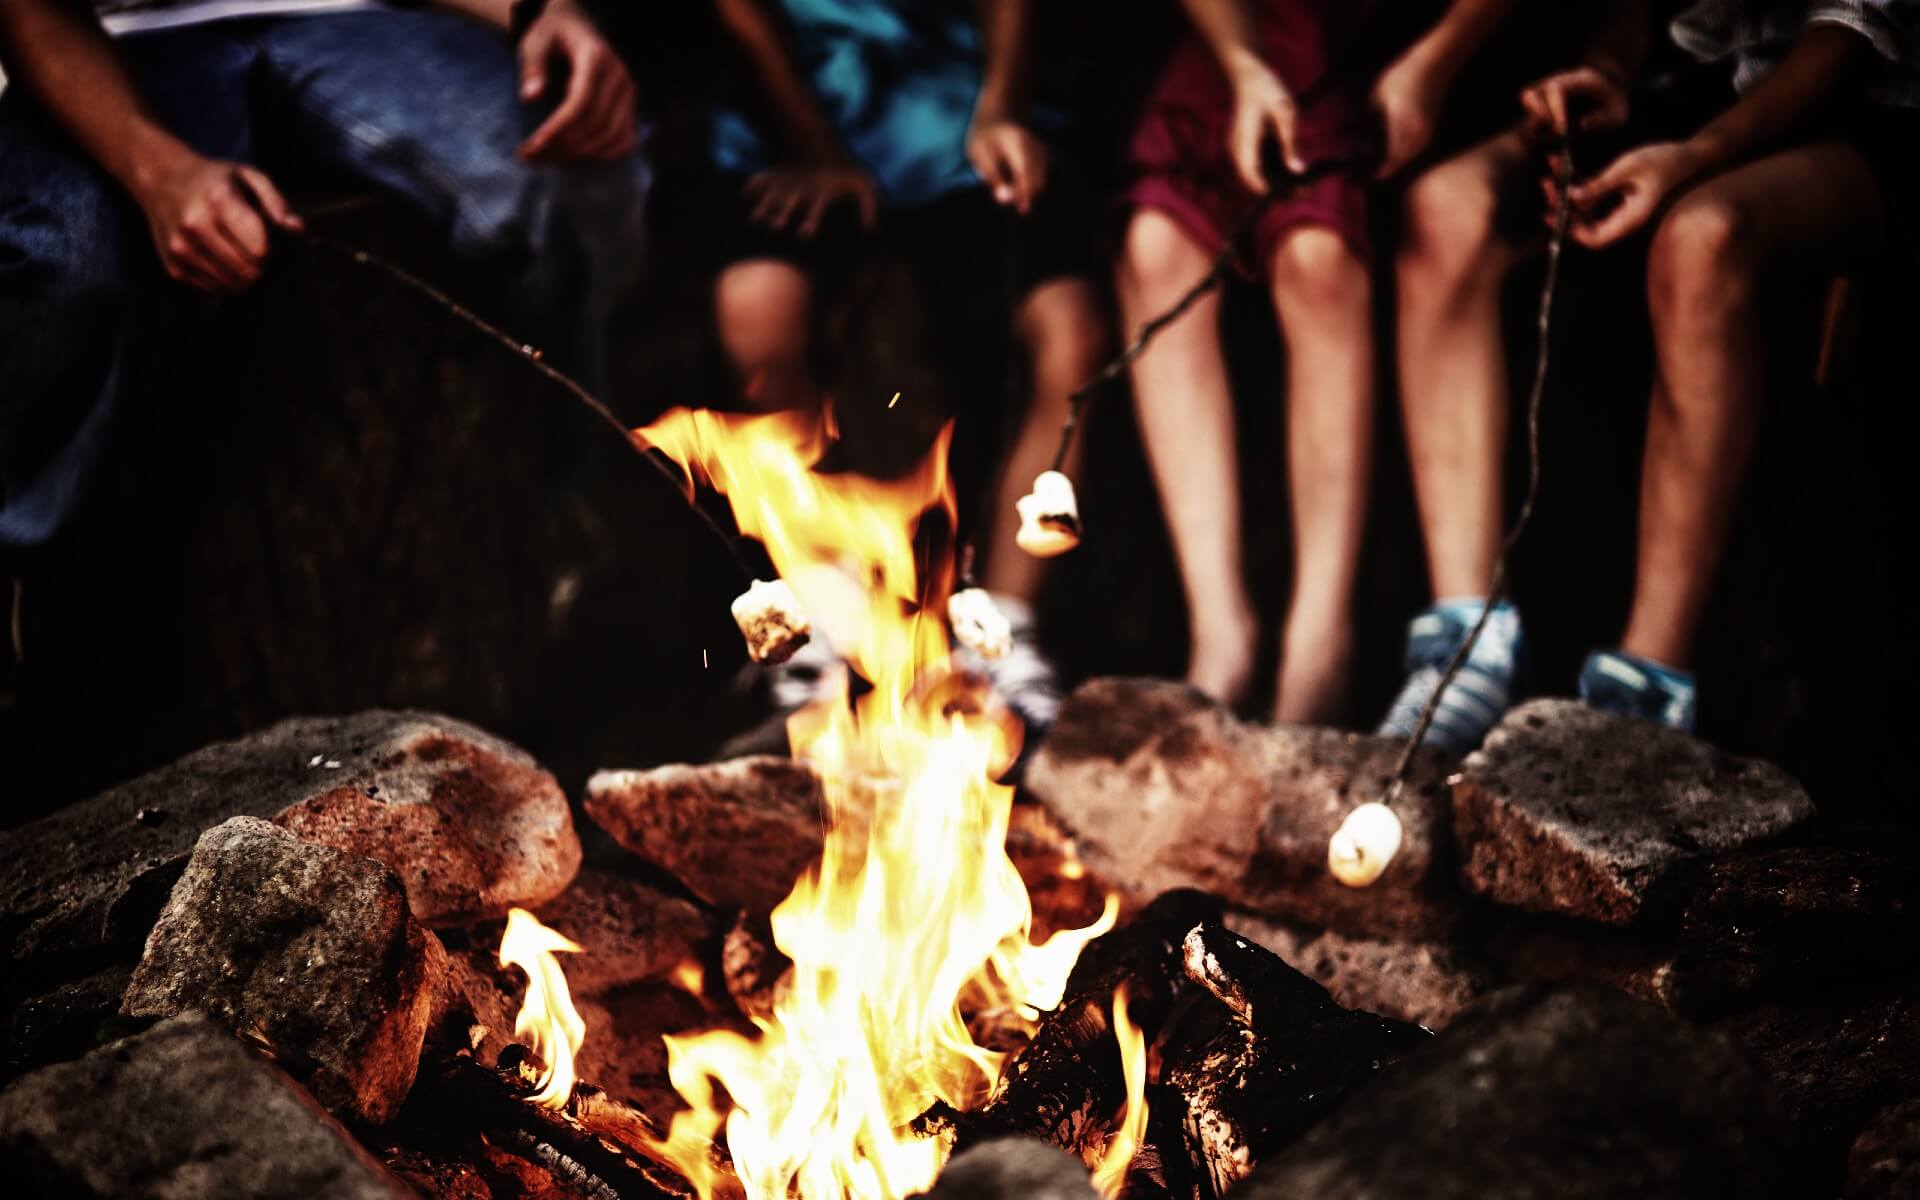 Family gathered around a campfire roasting marshmellows